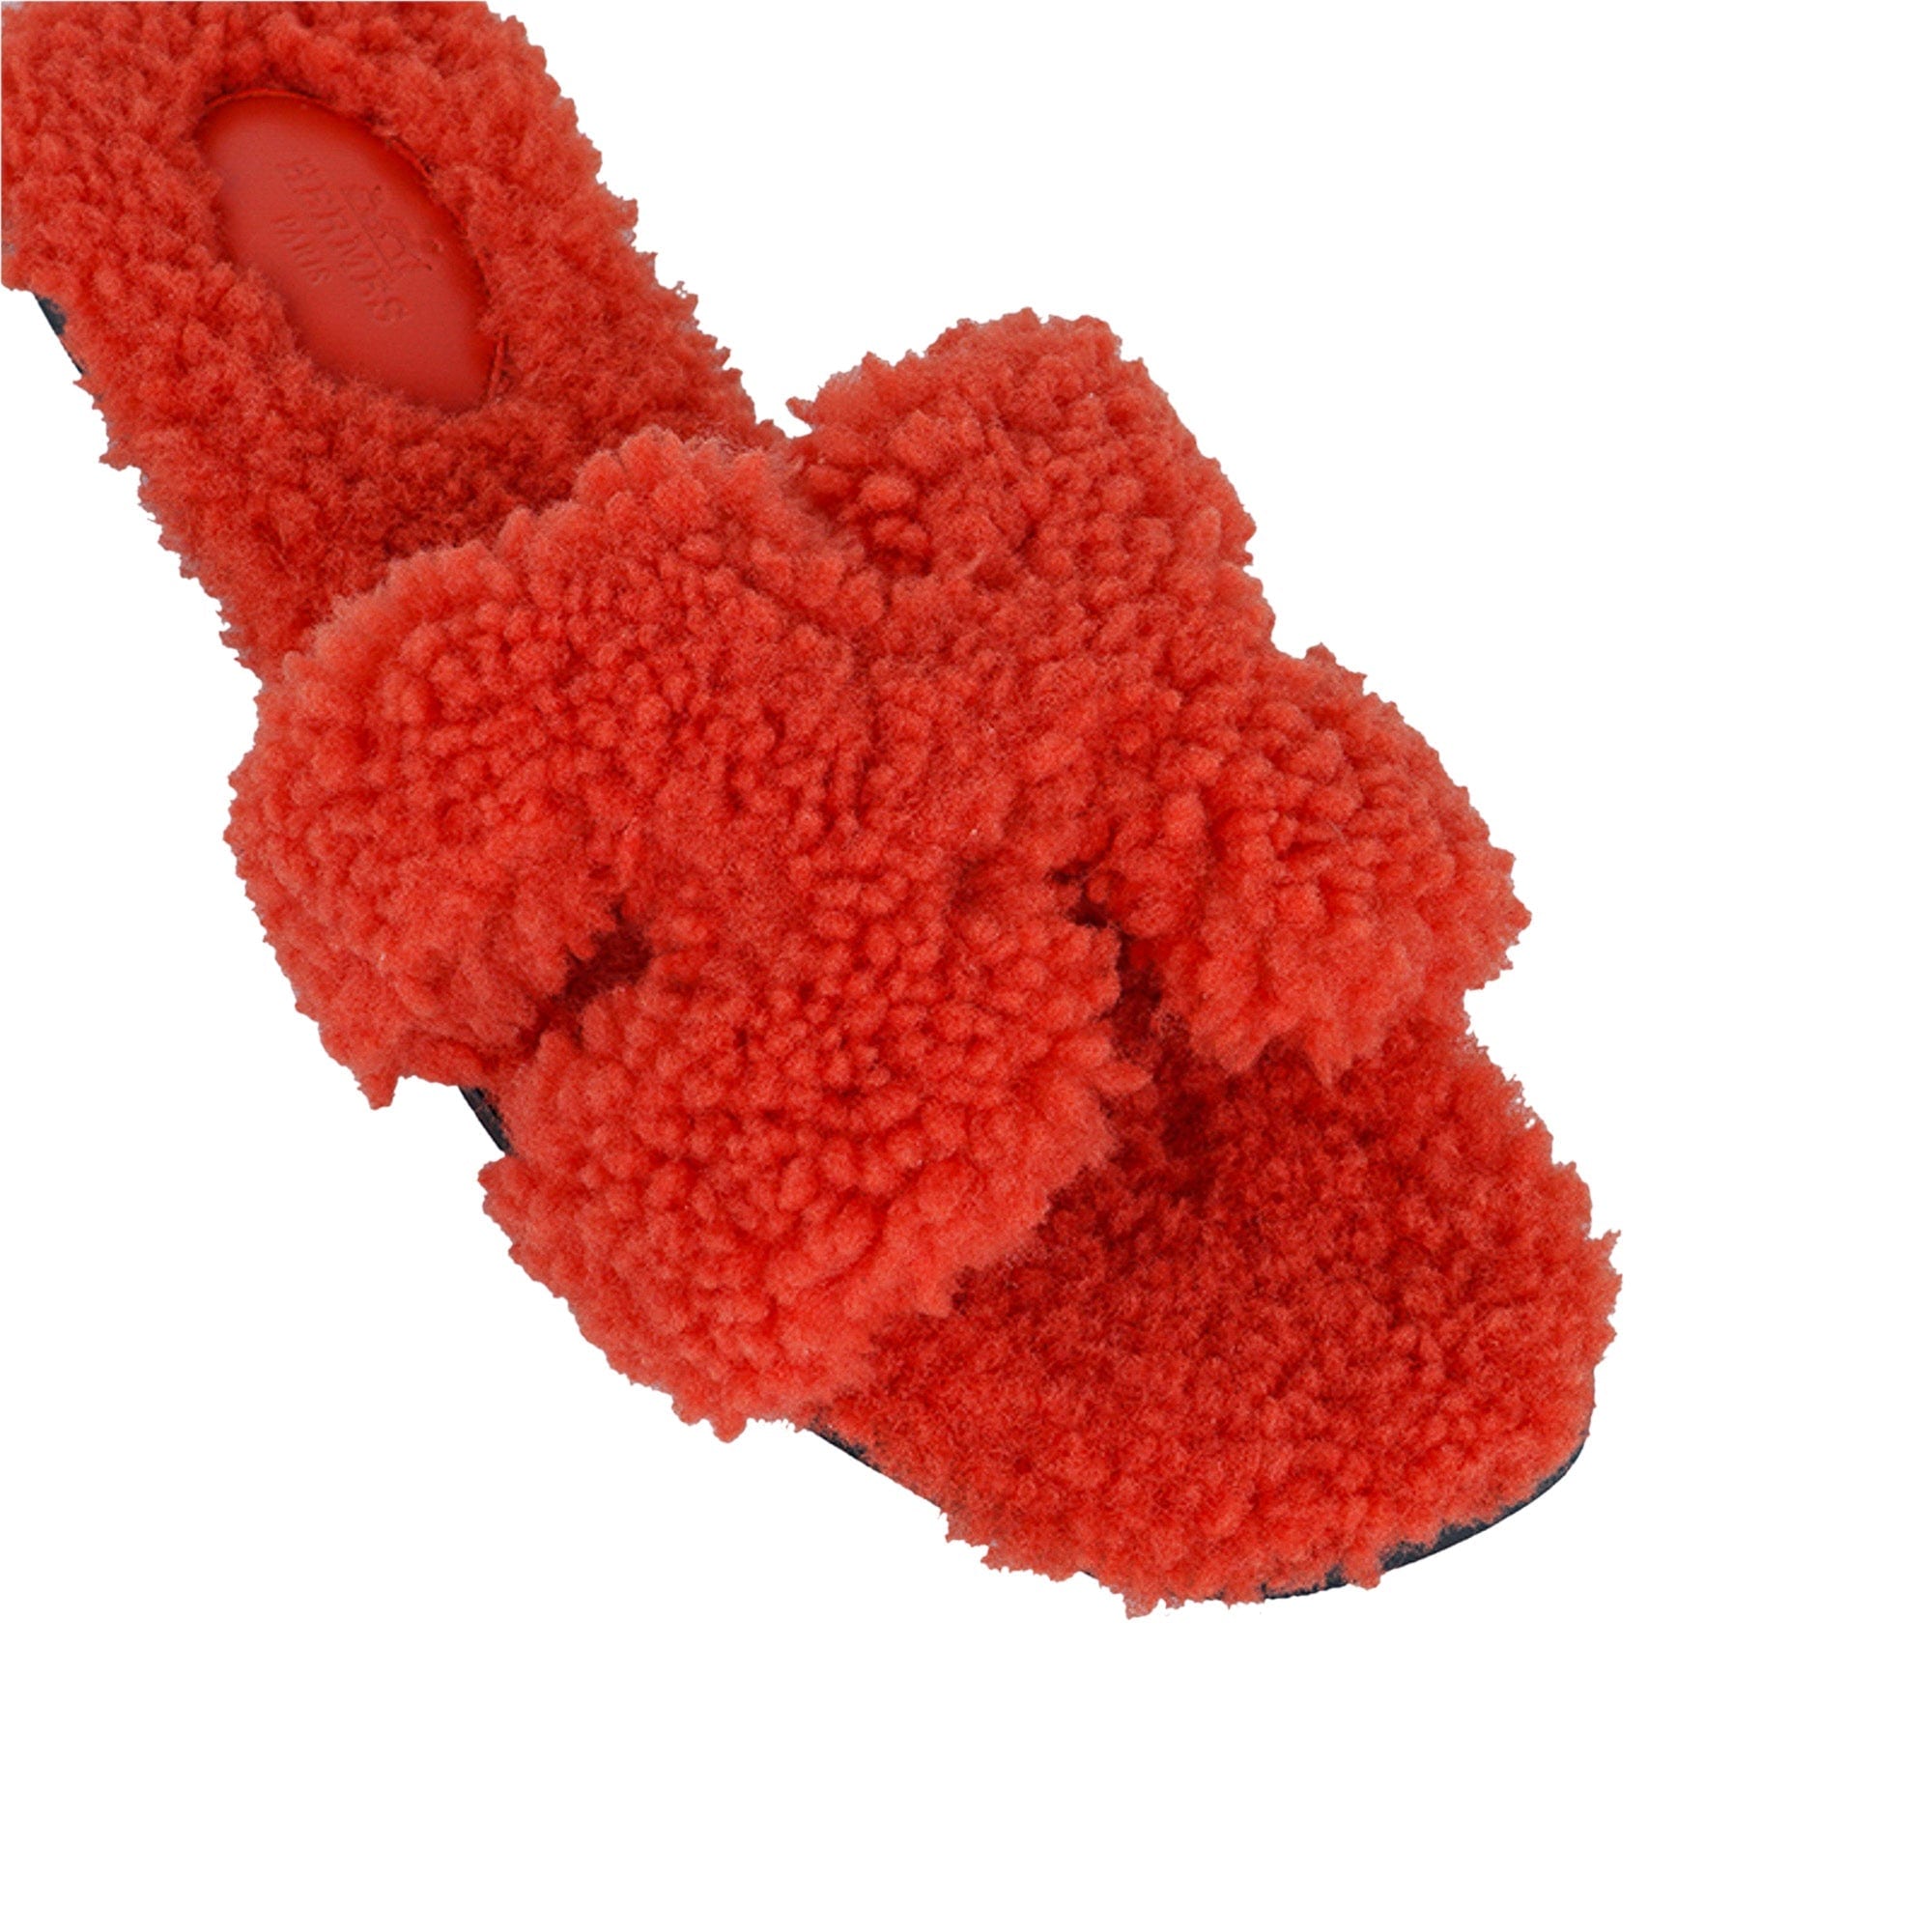 Brand New! Rare Color! 🤎Hermes Oran size 35 Sandal Etoupe 🤎 Flats Shoes